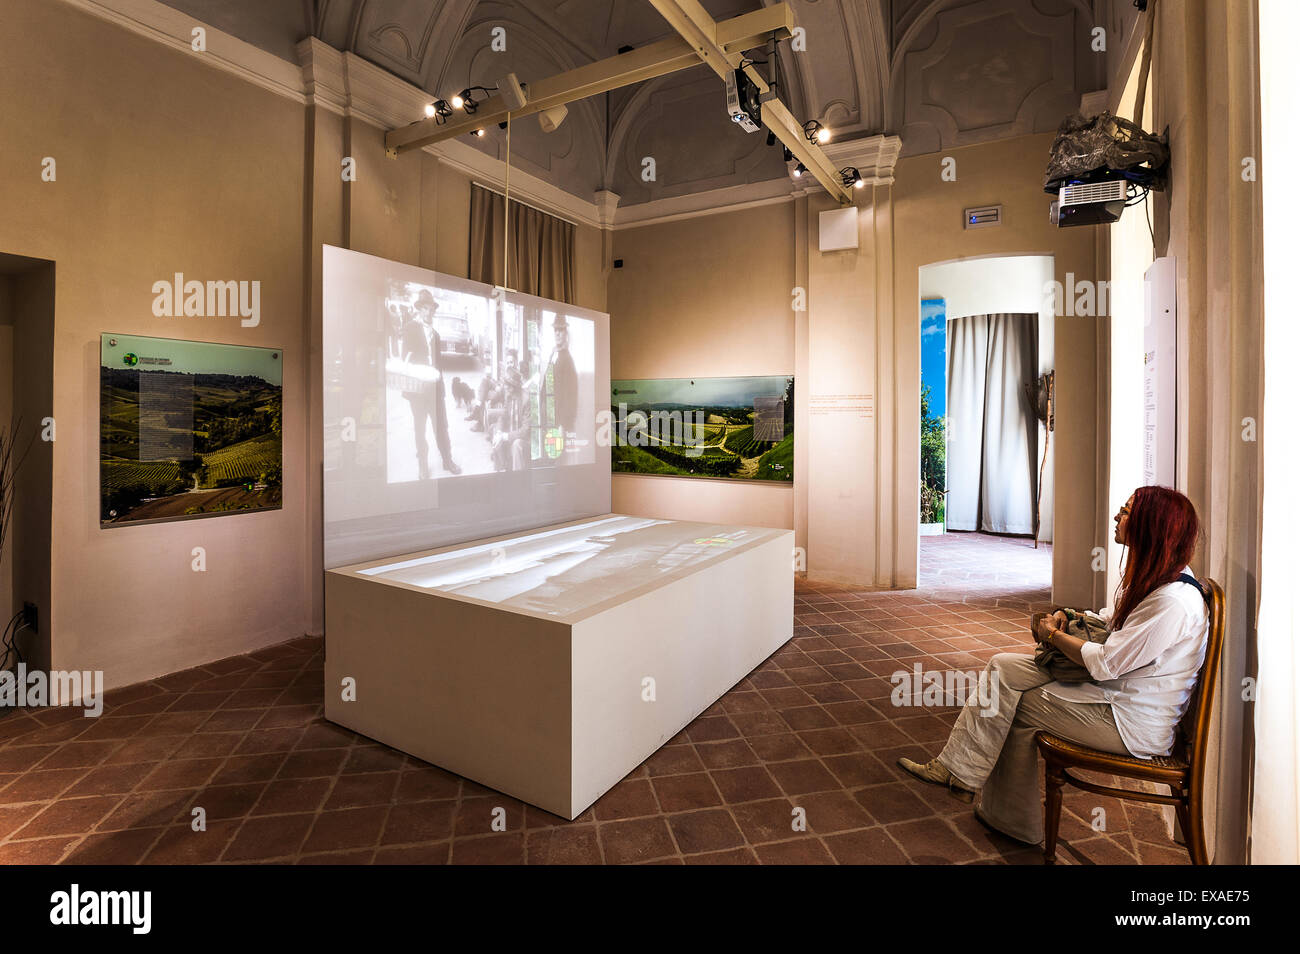 Italien-Piemont-Langhe und Roero World Heritage Magliano Alfieri Schloss-Museum Theater der Landschaft im Inneren des Schlosses eröffnet 13. Juni 2015 Stockfoto